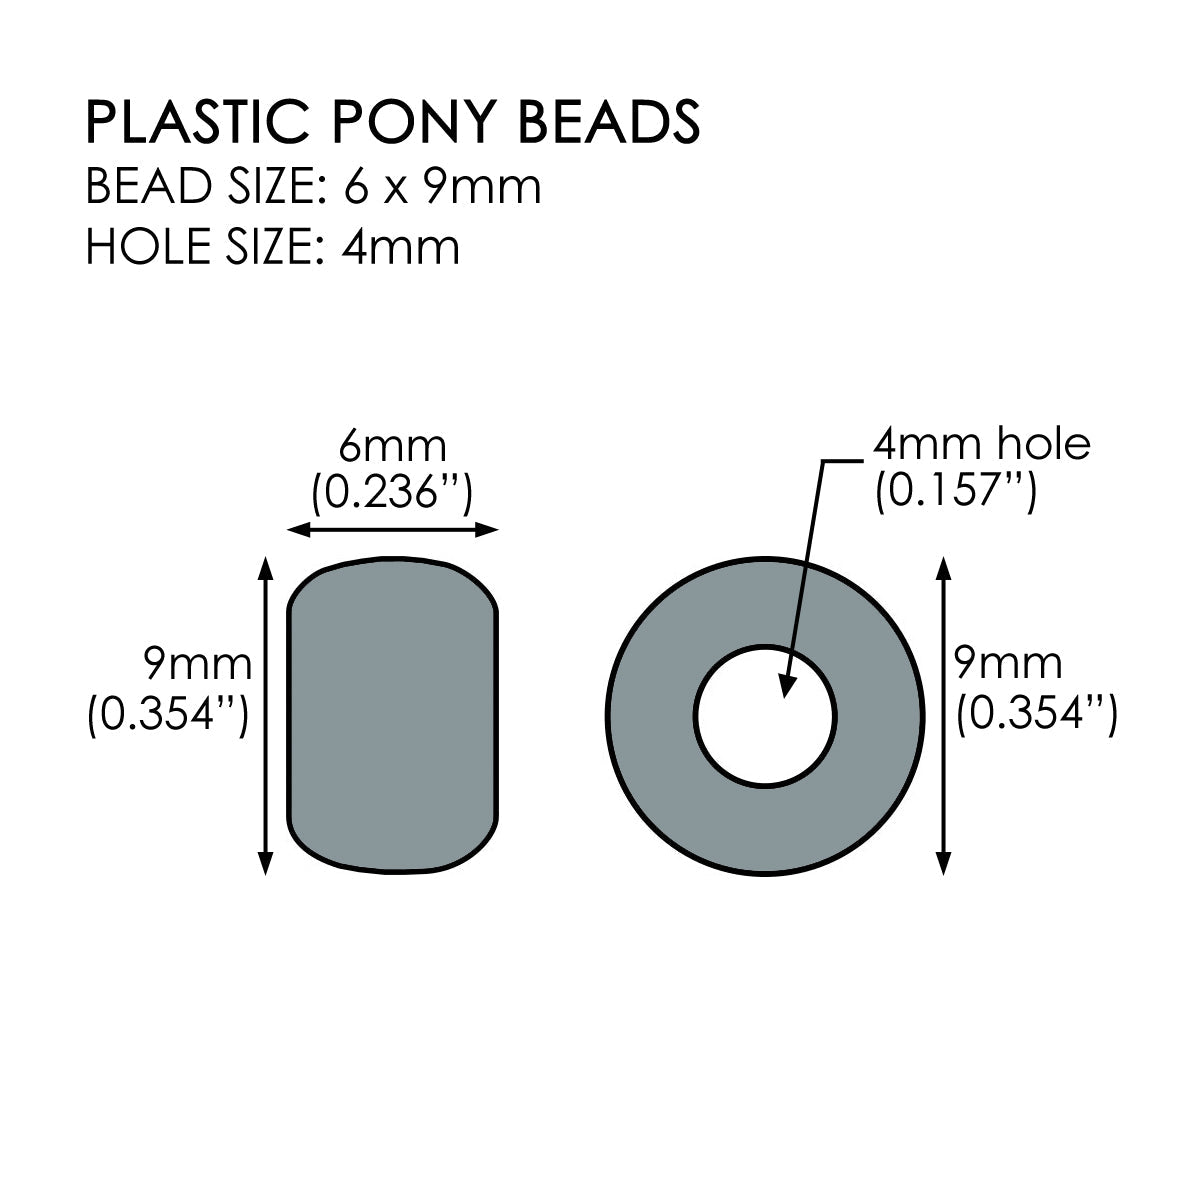 Glow in Dark Mix Craft Pony Beads 6 x 9mm, Made in the USA - Pony Beads Plus